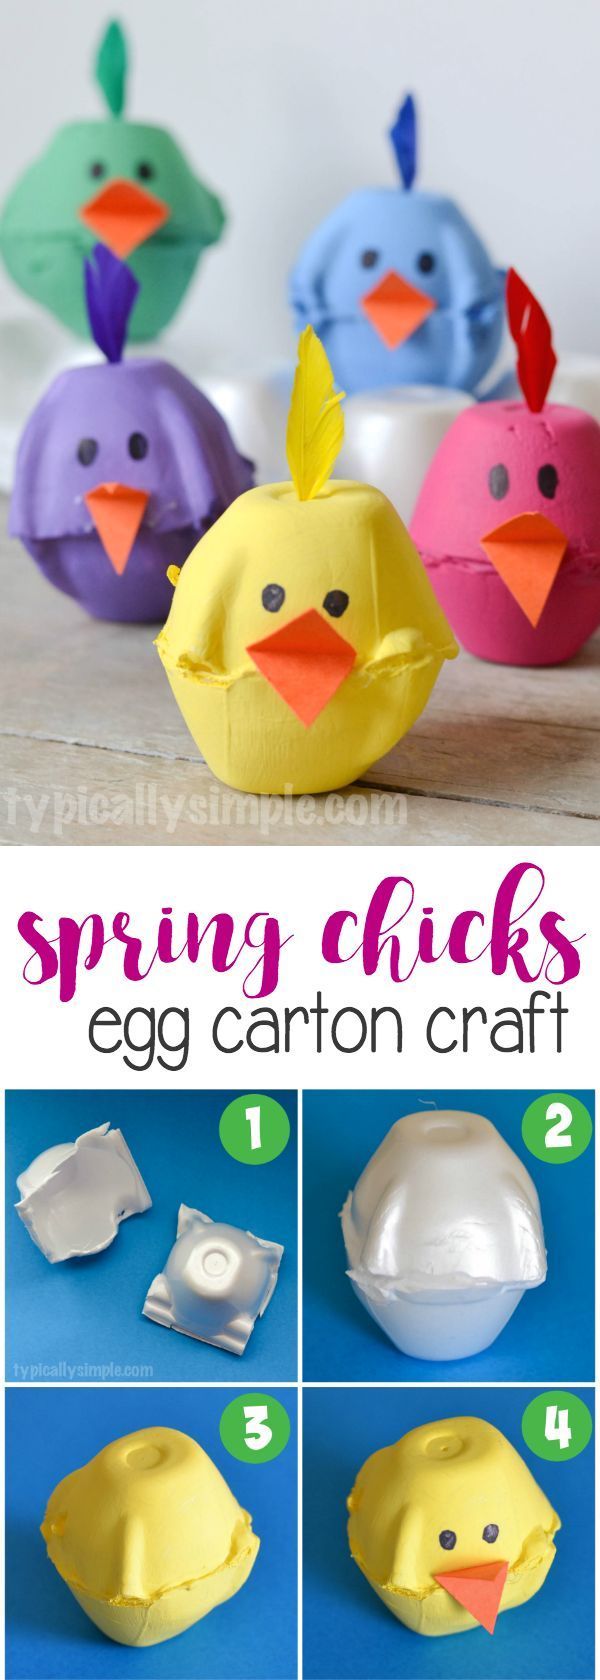 Spring Chicks Egg Carton Craft -   25 kids crafts easter ideas